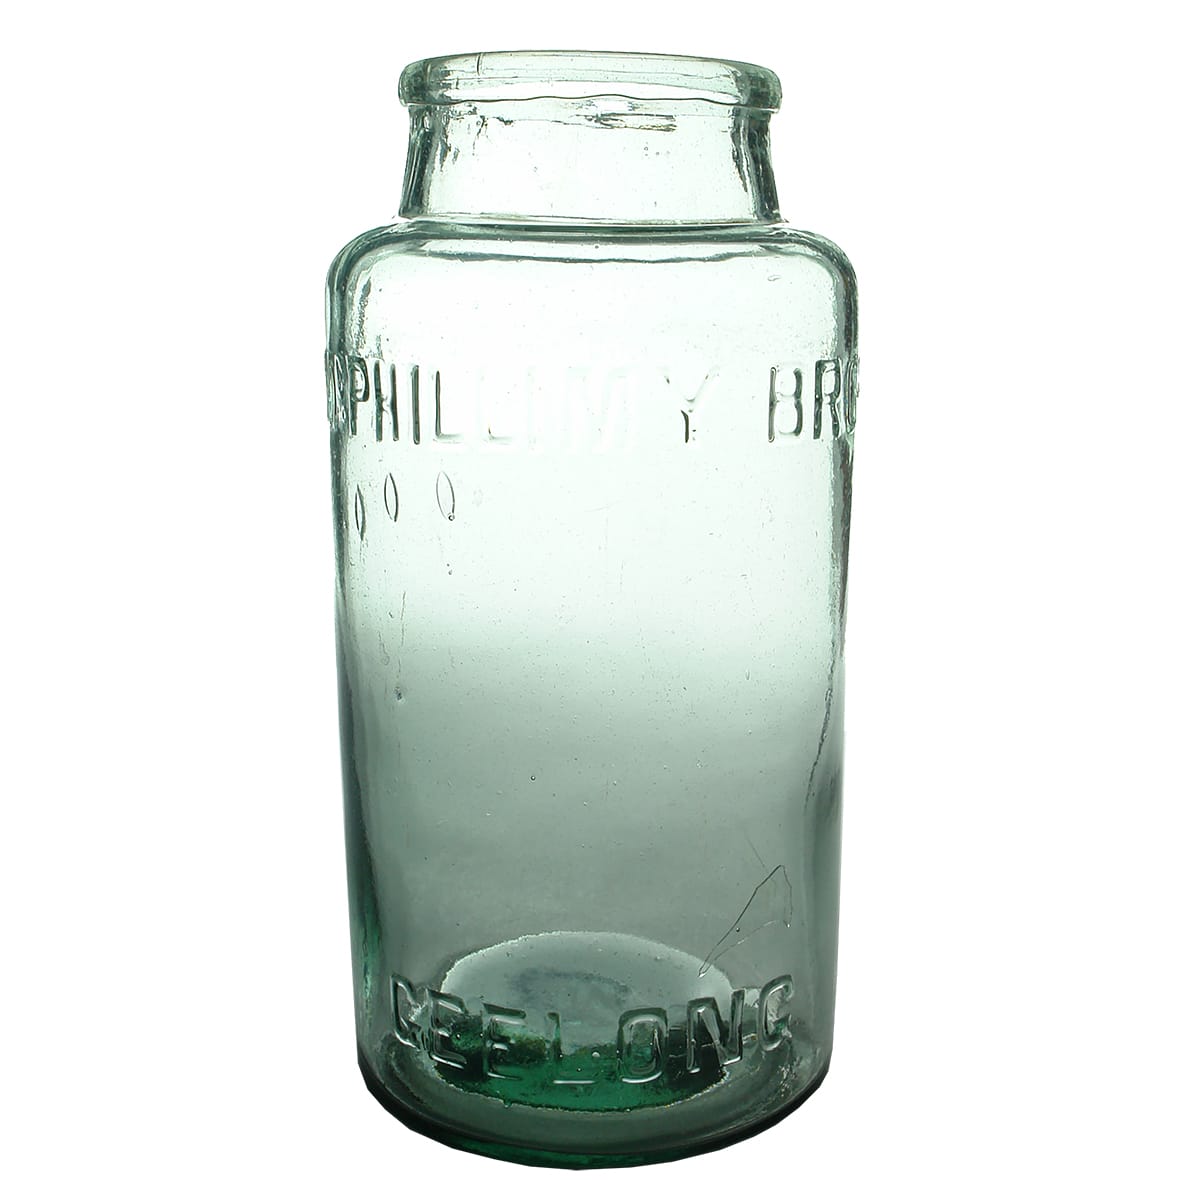 Lolly Jar. McPhillimy Bros, Geelong. Aqua. 1 Gallon.